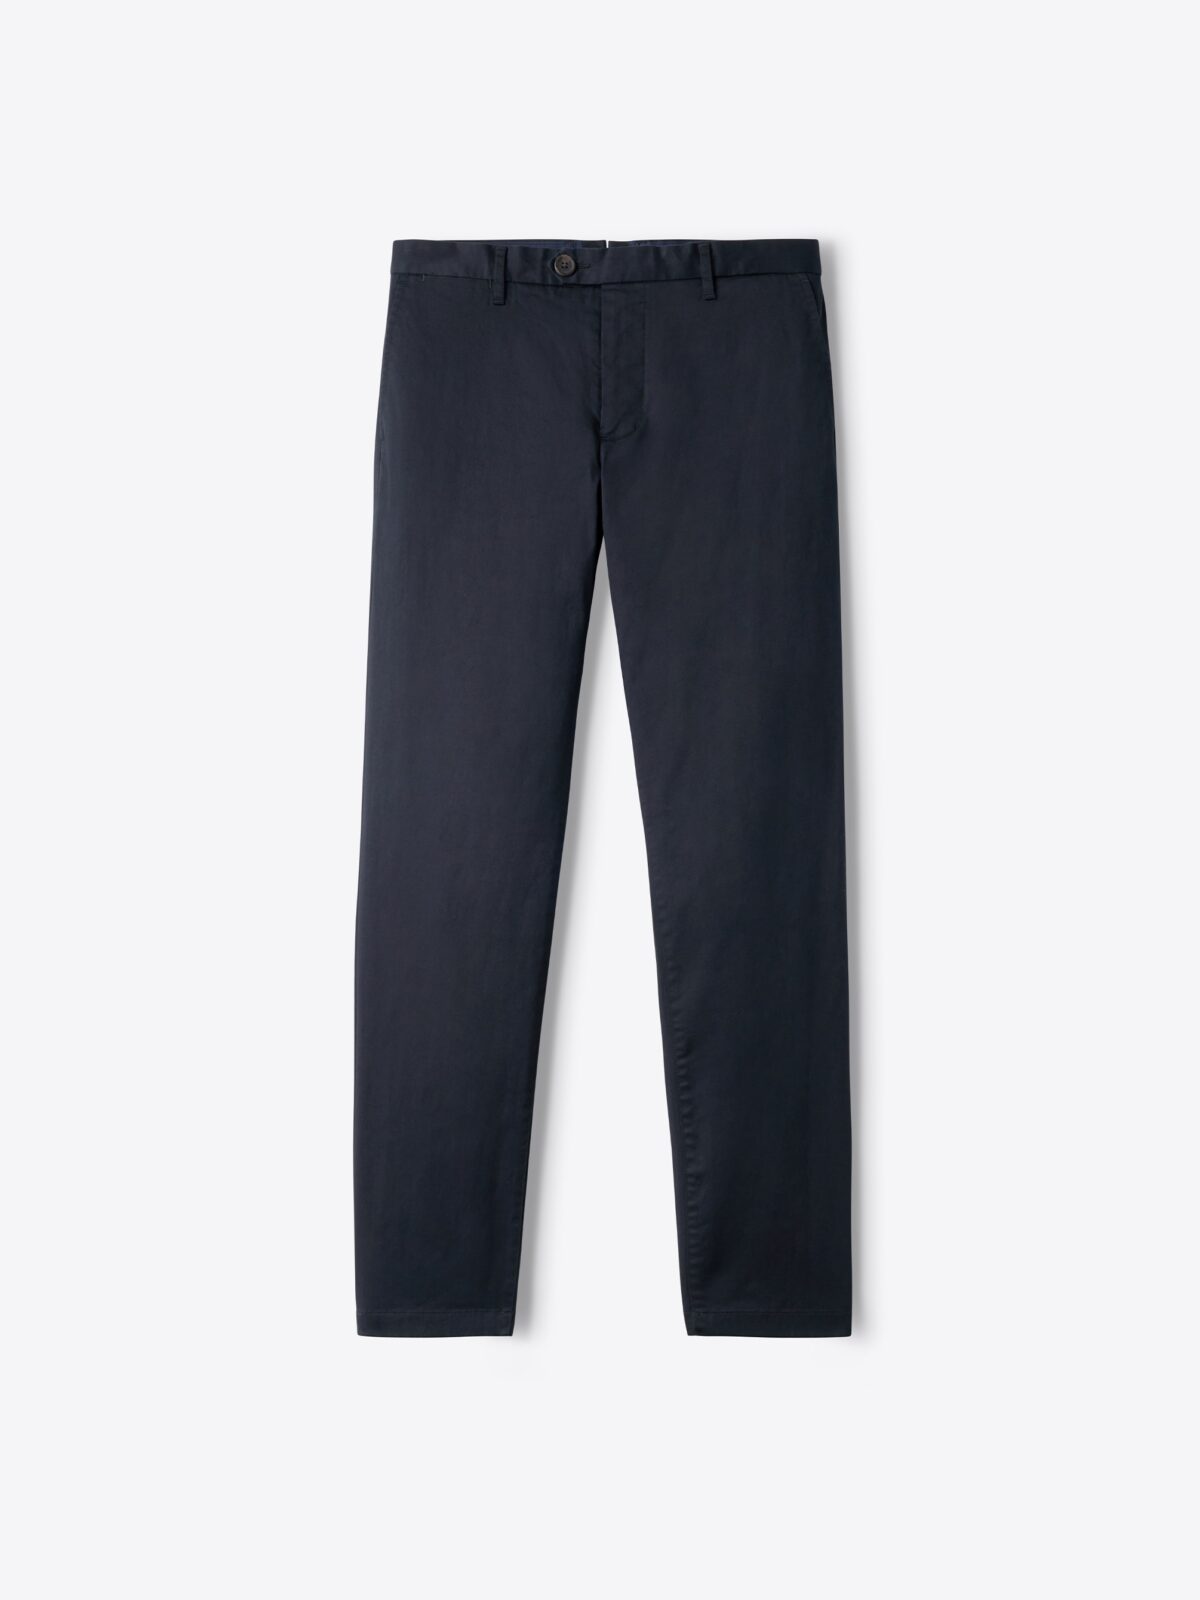 Di Sondrio Navy Stretch Cotton Chino - Custom Fit Pants